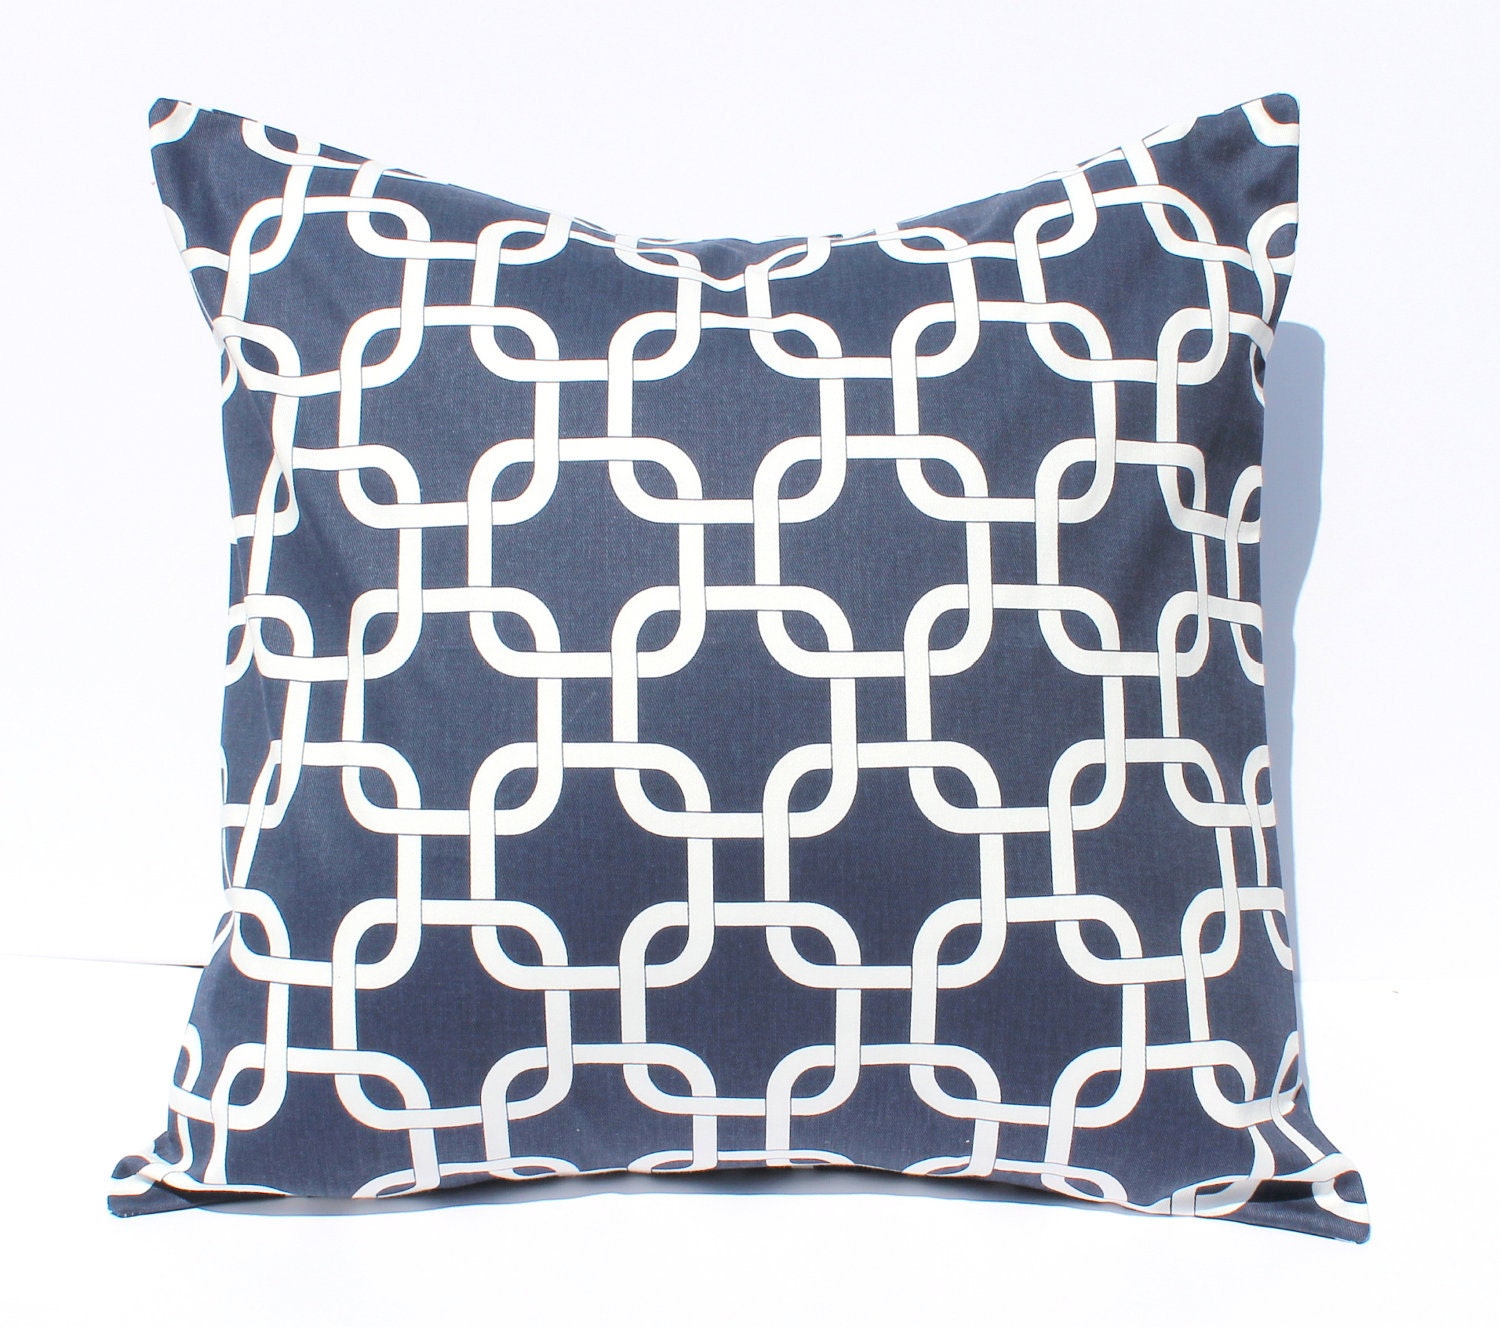 2 Decorative Pillows Covers - Navy Blue Geometric Links . 18 x 18 Cushions - SewGracious